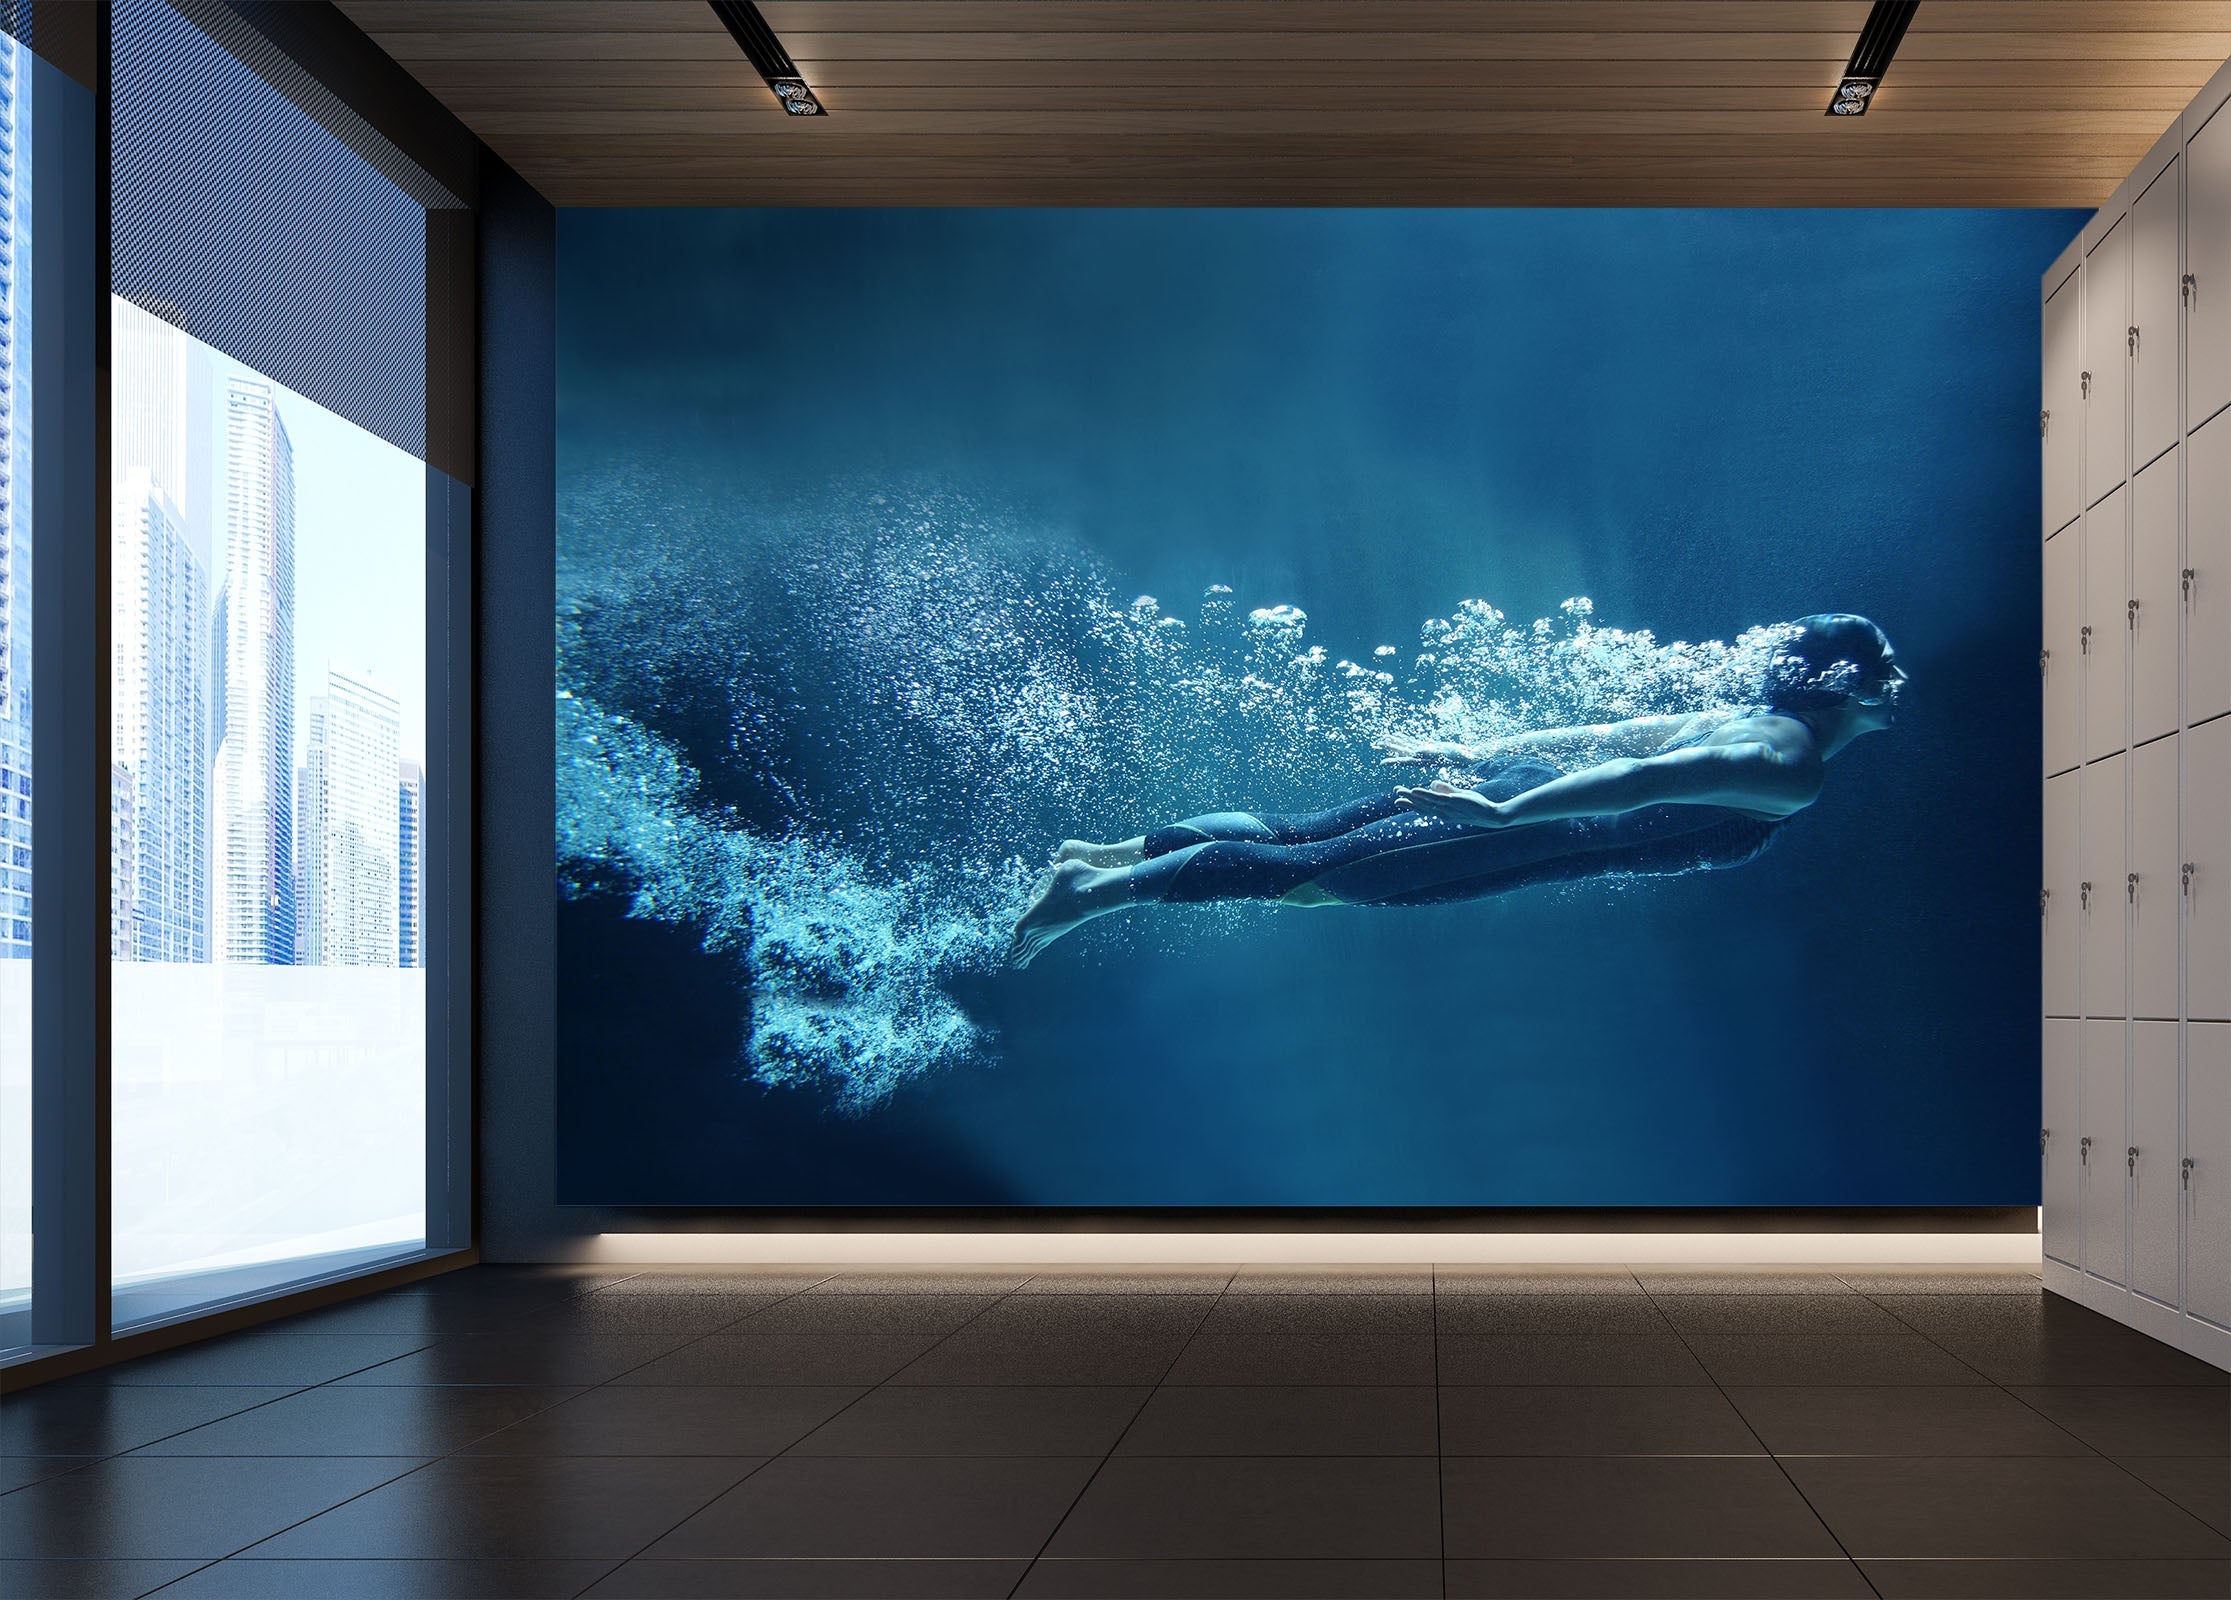 3D Submarine Diving 056 Wall Murals Wallpaper AJ Wallpaper 2 